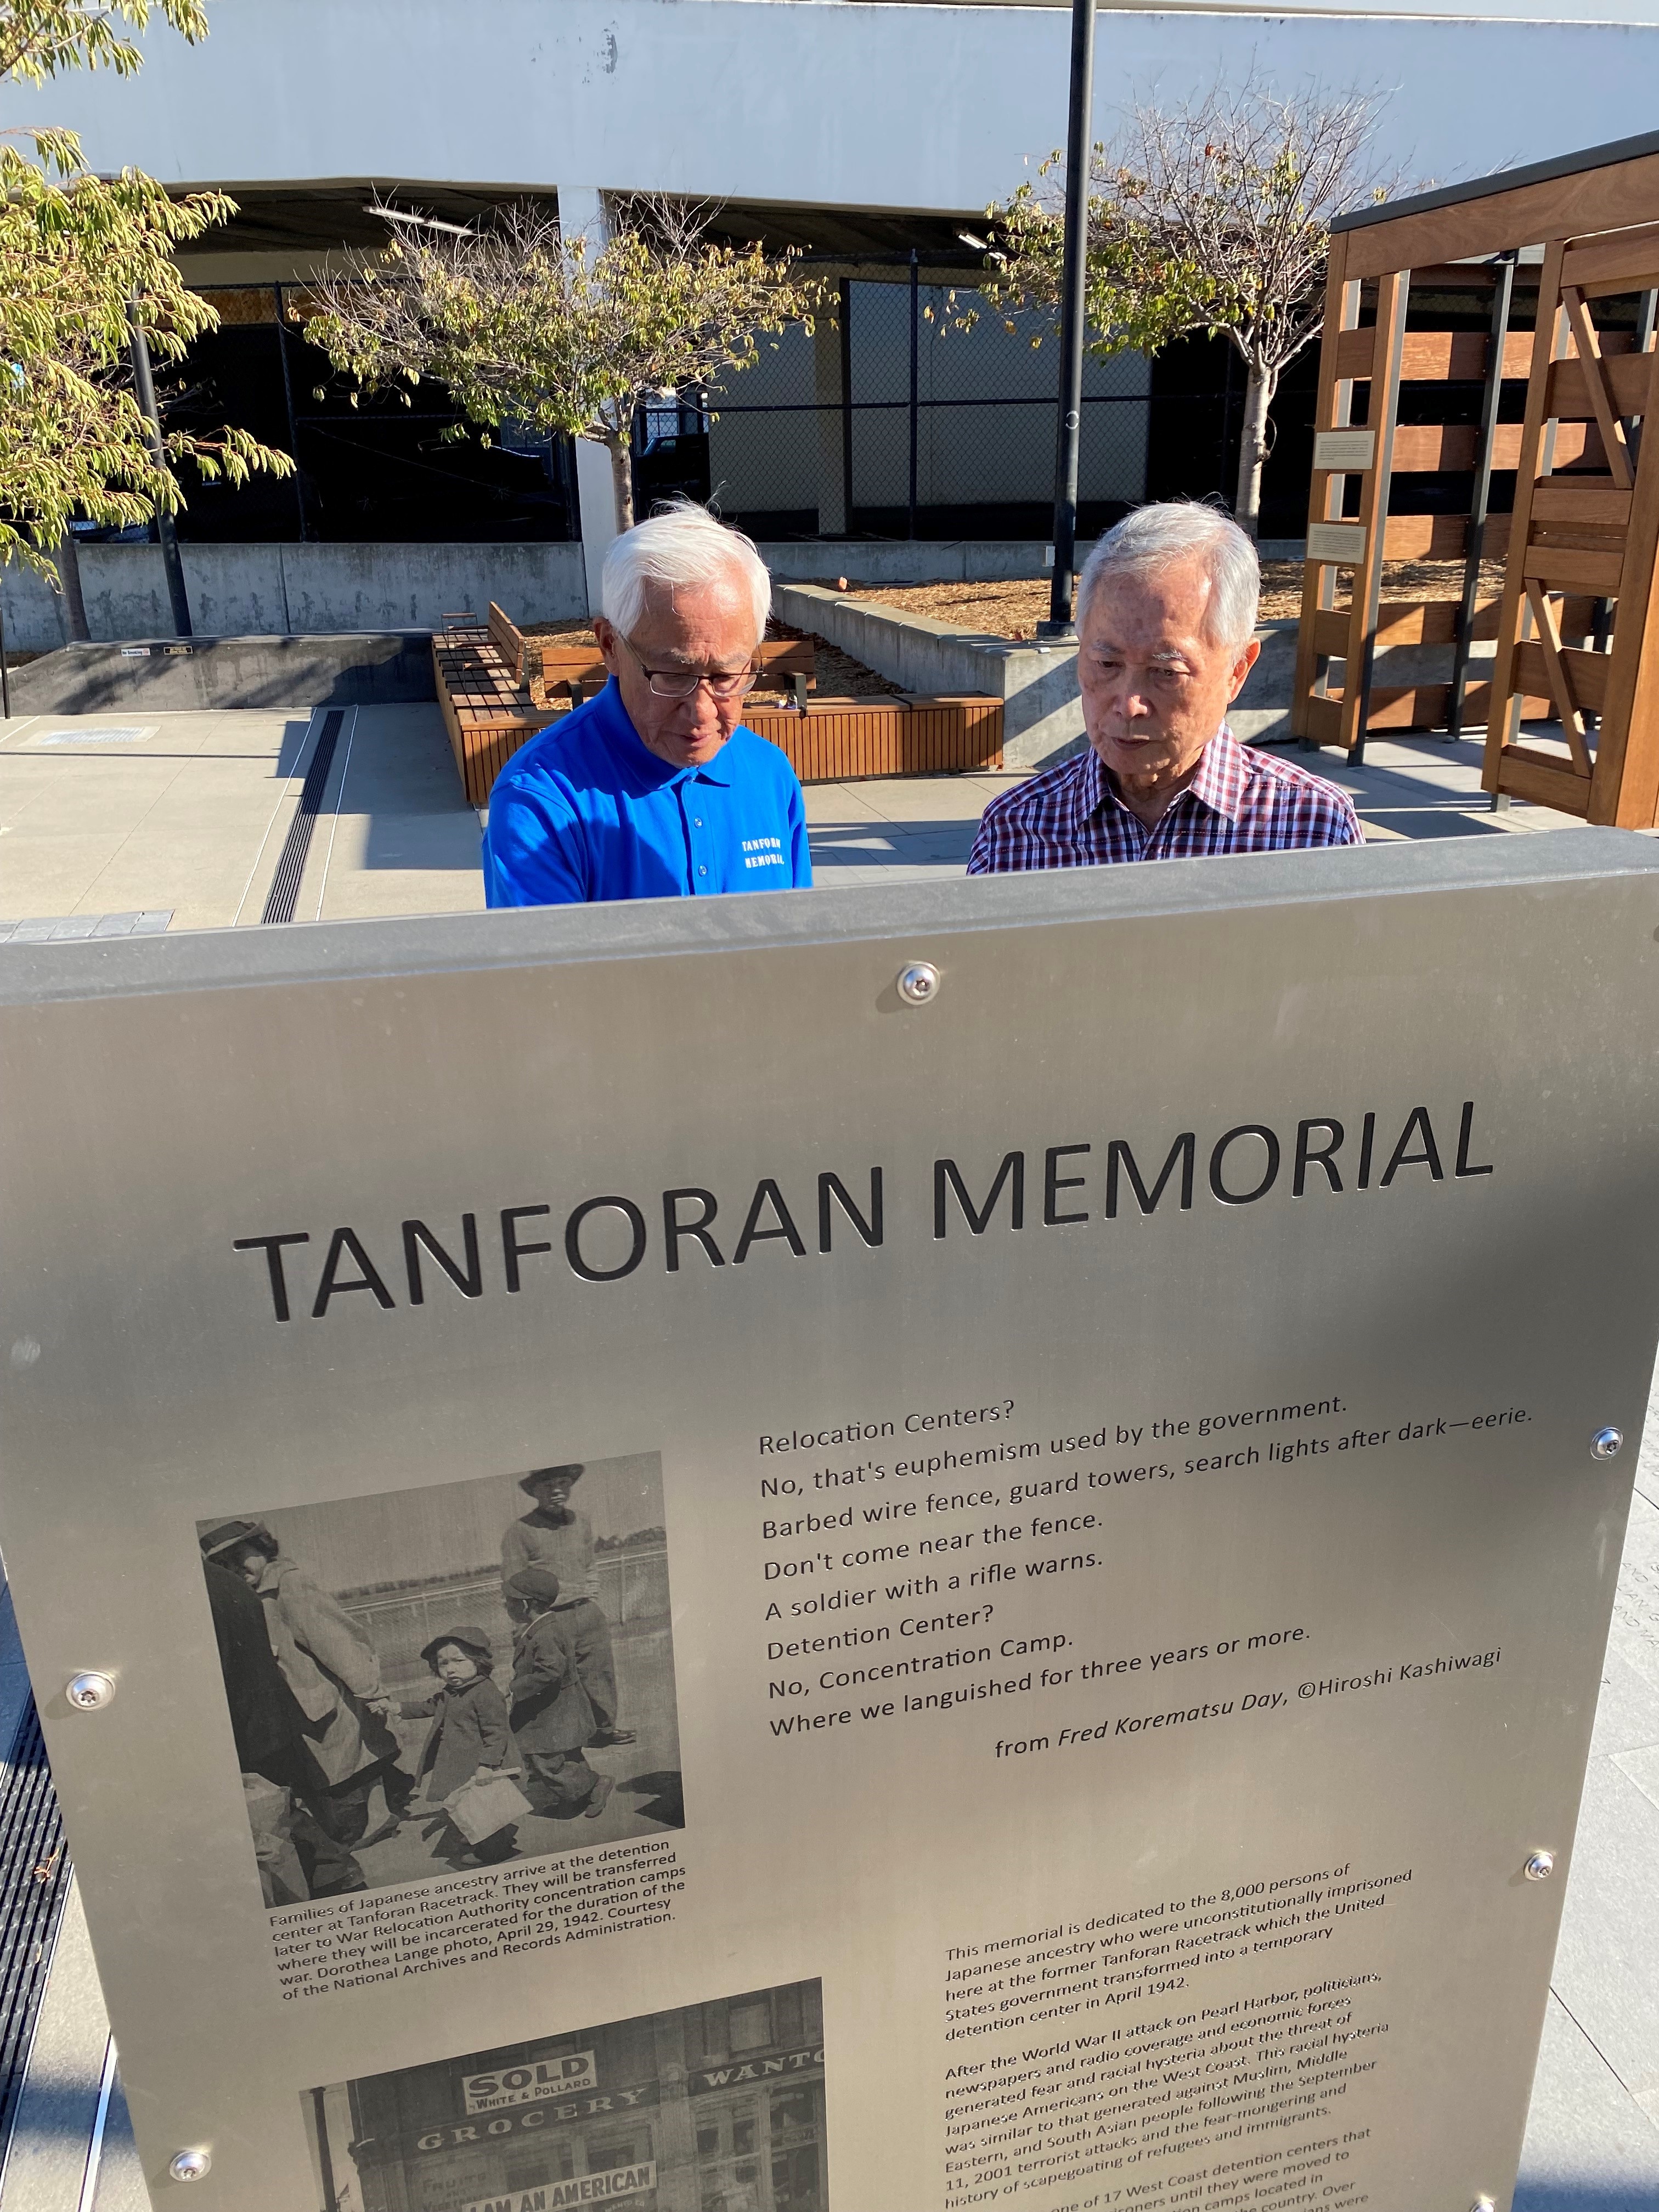 George Takei and Steve Okamoto looking at memorial descriptions